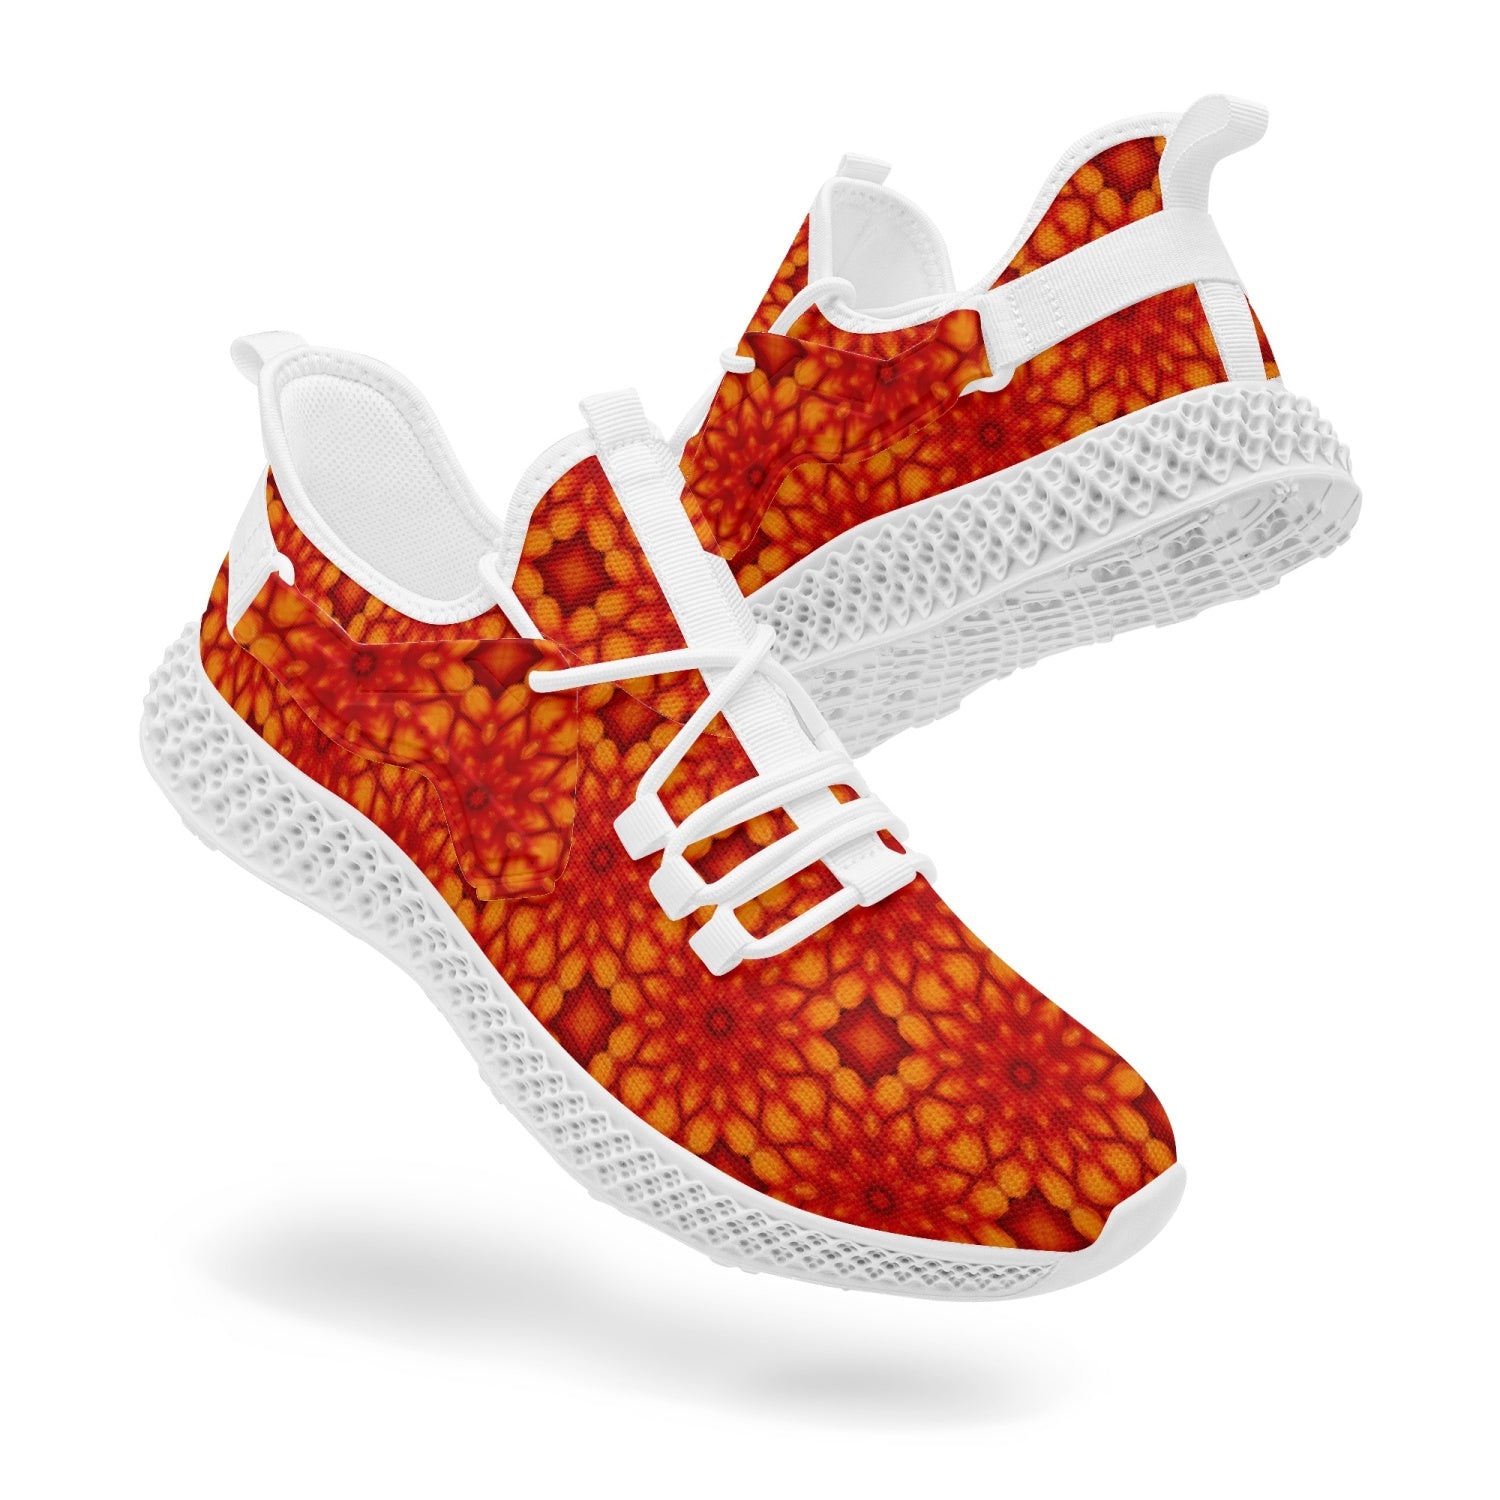 Orange Sacral Chacra, Net Style Mesh Knit Sneakers, by Sensus Studio Design